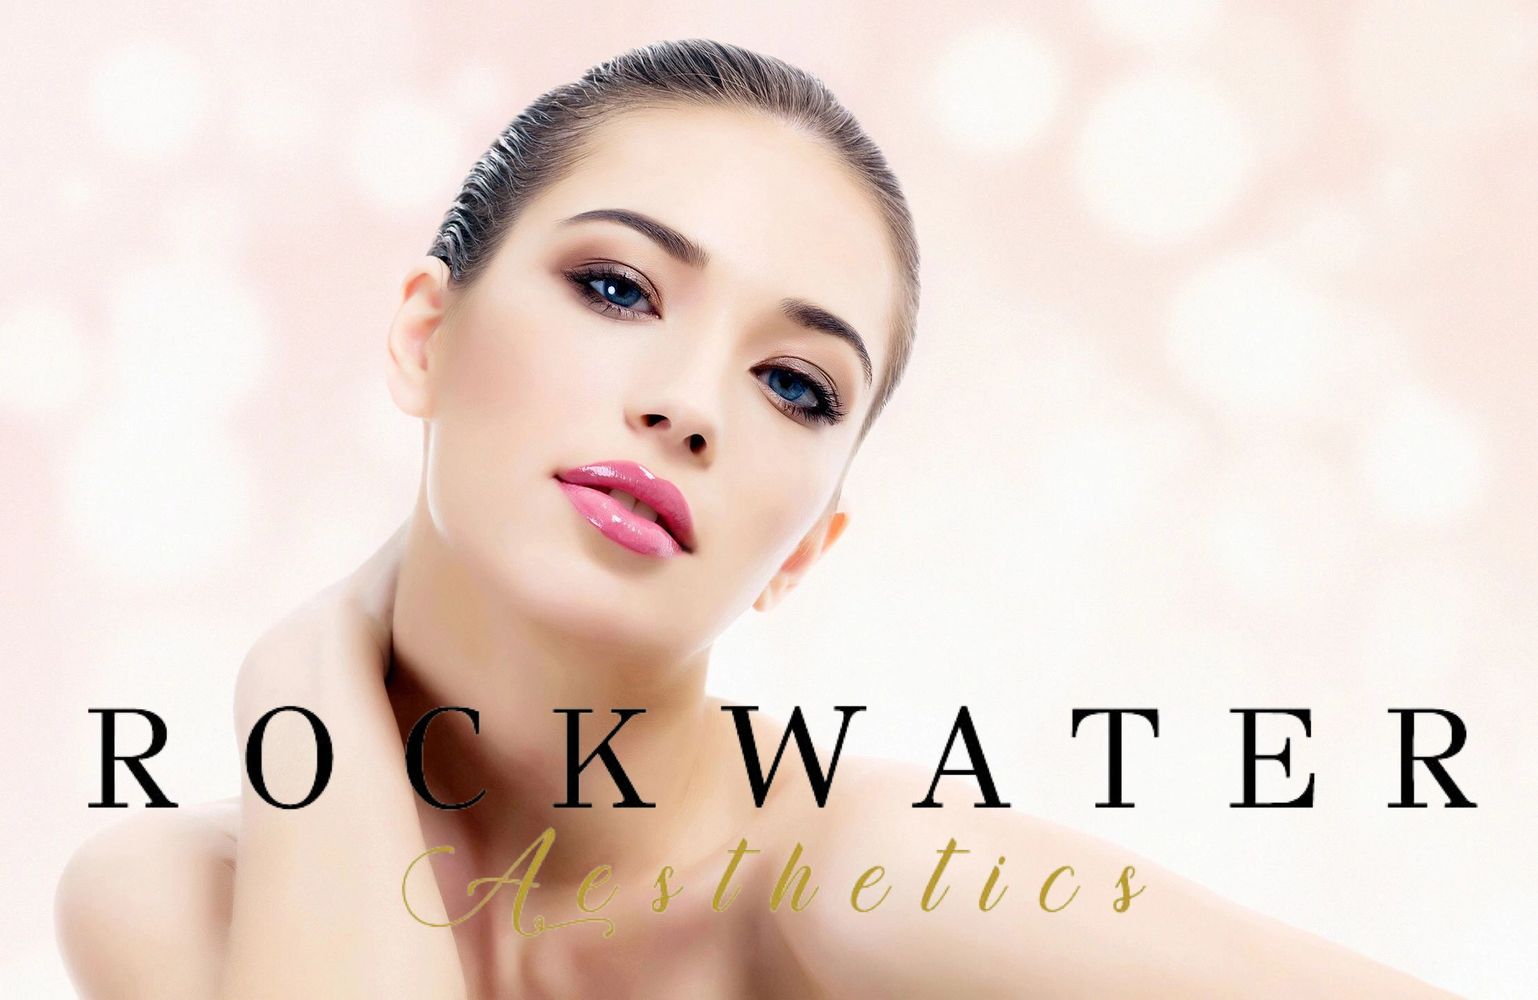 beautiful woman Rockwater Aesthetics botox dysport filler